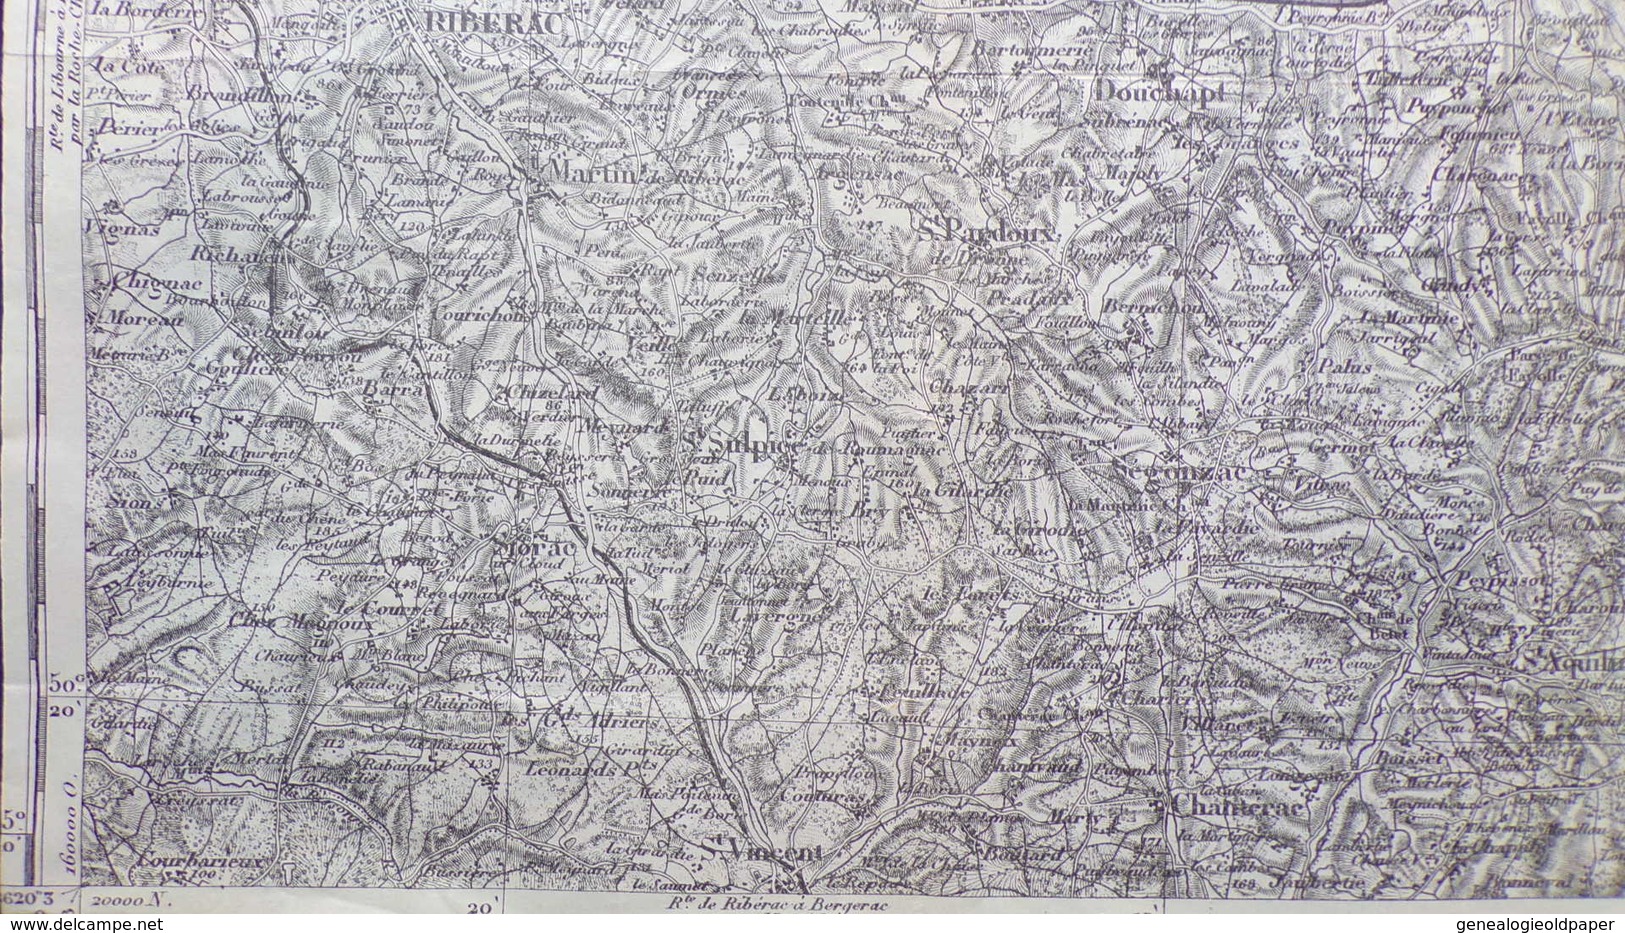 24- RARE CARTE 1909- RIBERAC-DOUCHAPT-ALLEMANS-CHAPDEUIL-MARSAC-SAINT AQUILIN-BOURDEILLES-MENSIGNAC-SIORAC-LUSIGNAC - Topographische Karten